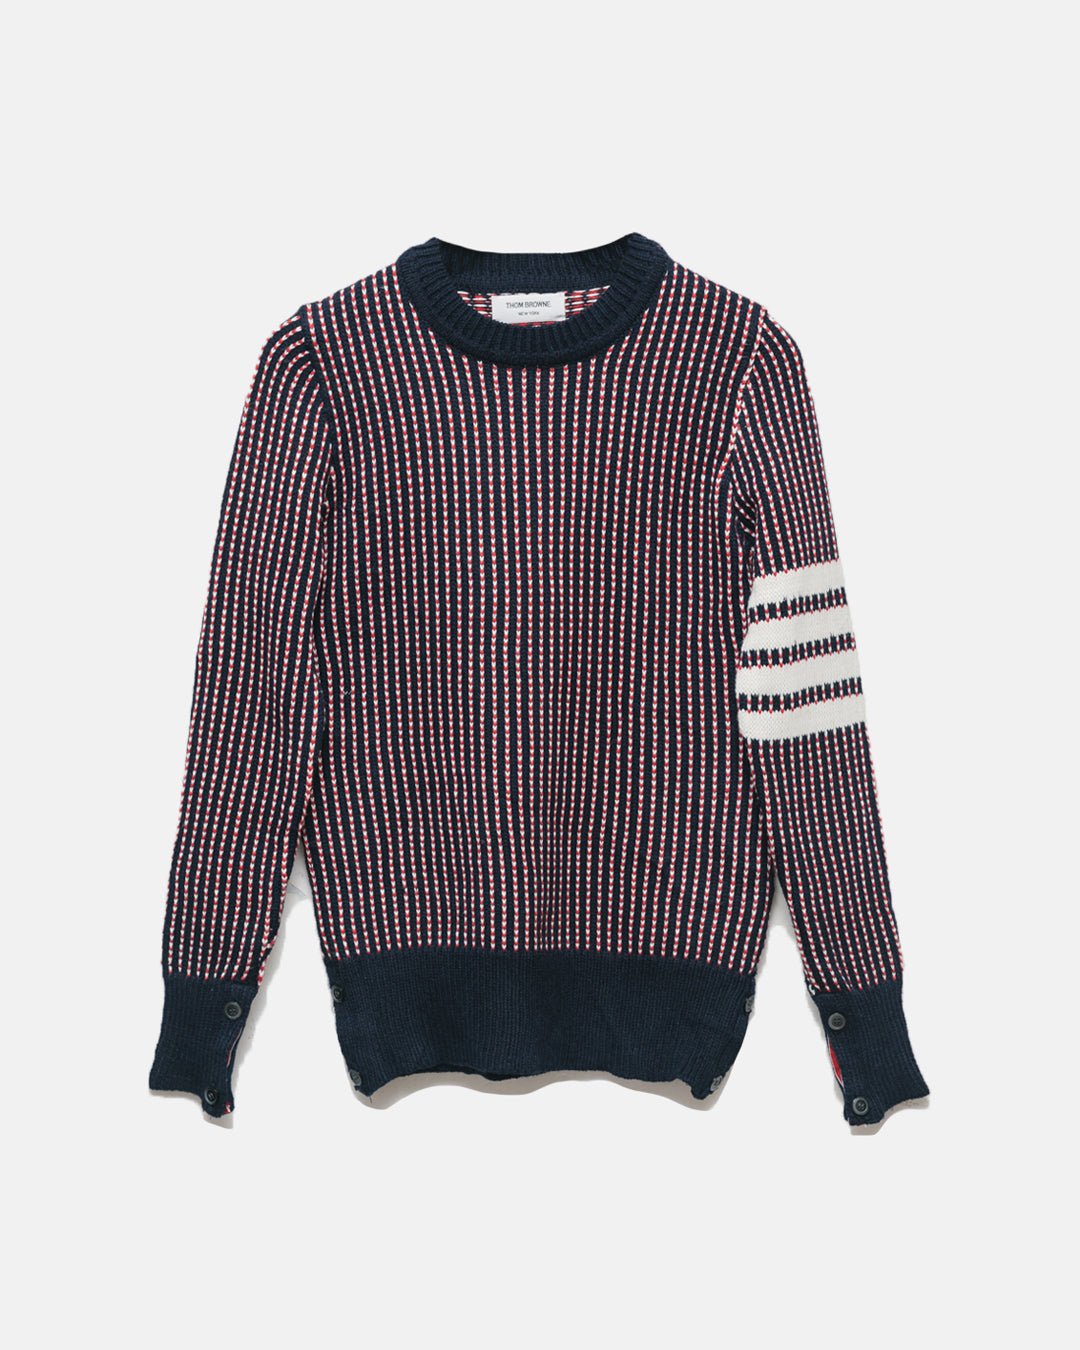 Thom browne 4 bar sweater